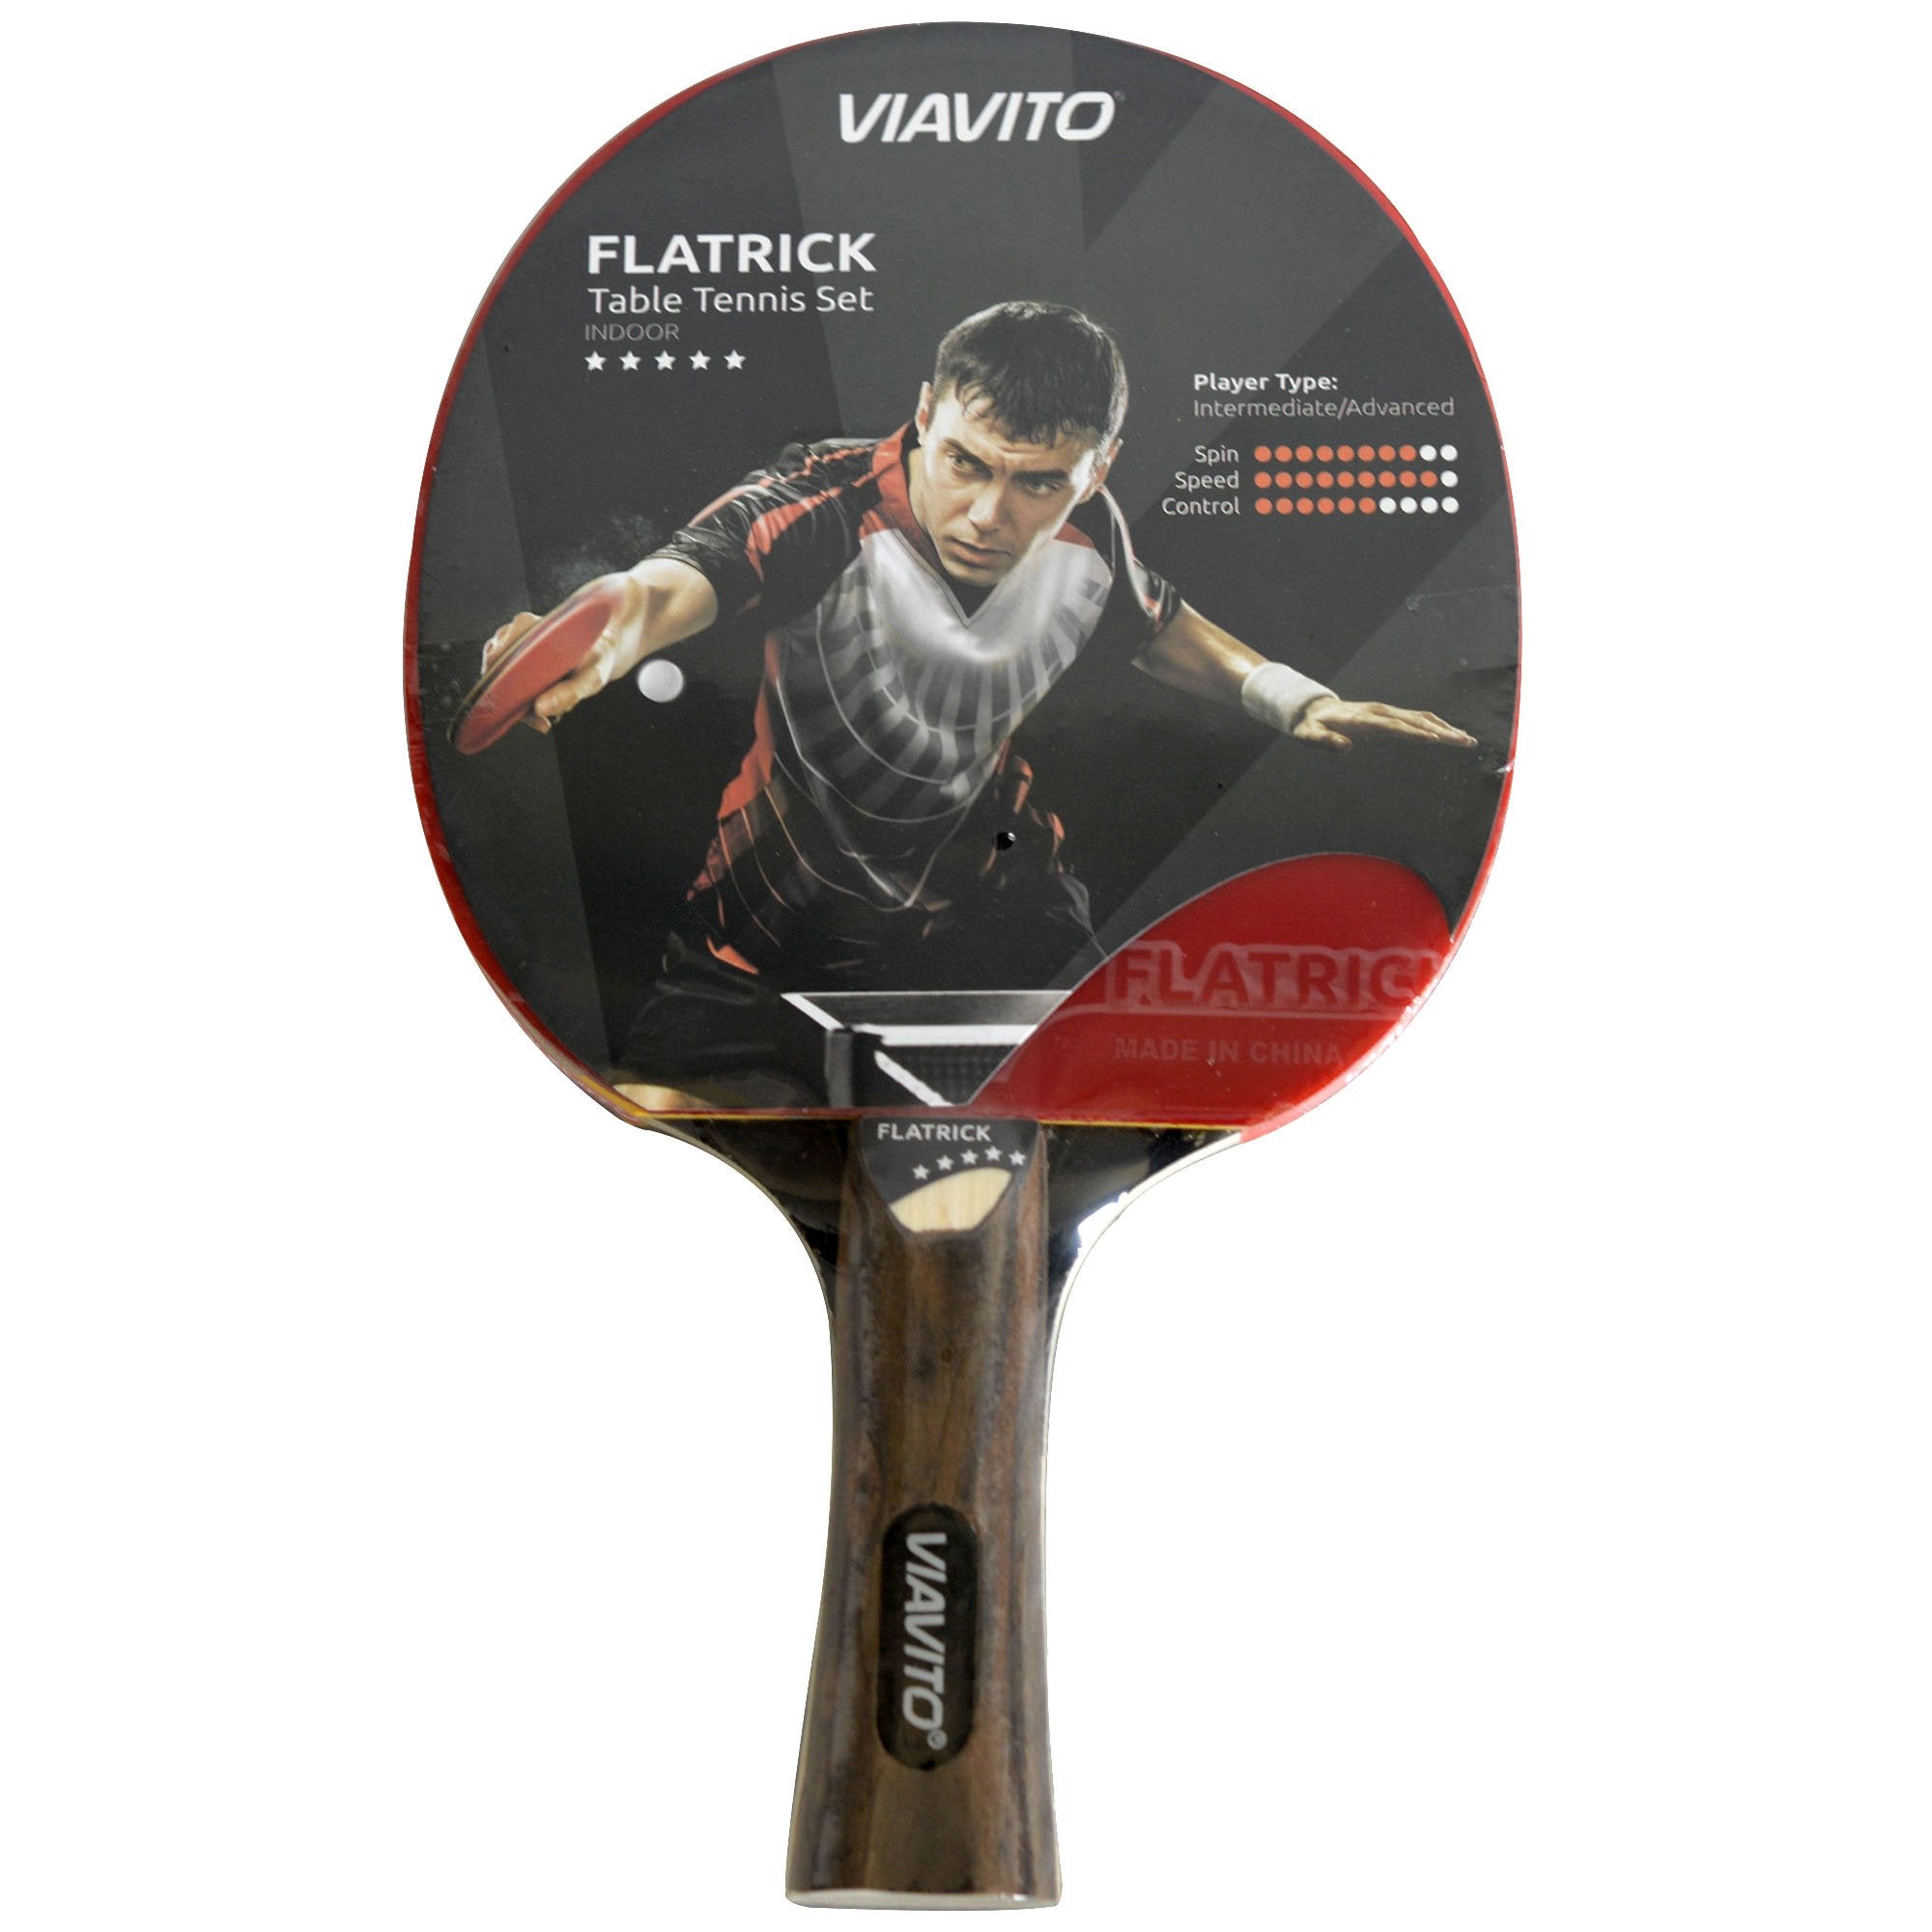 Viavito FlaTrick 5 Star Table Tennis Bat